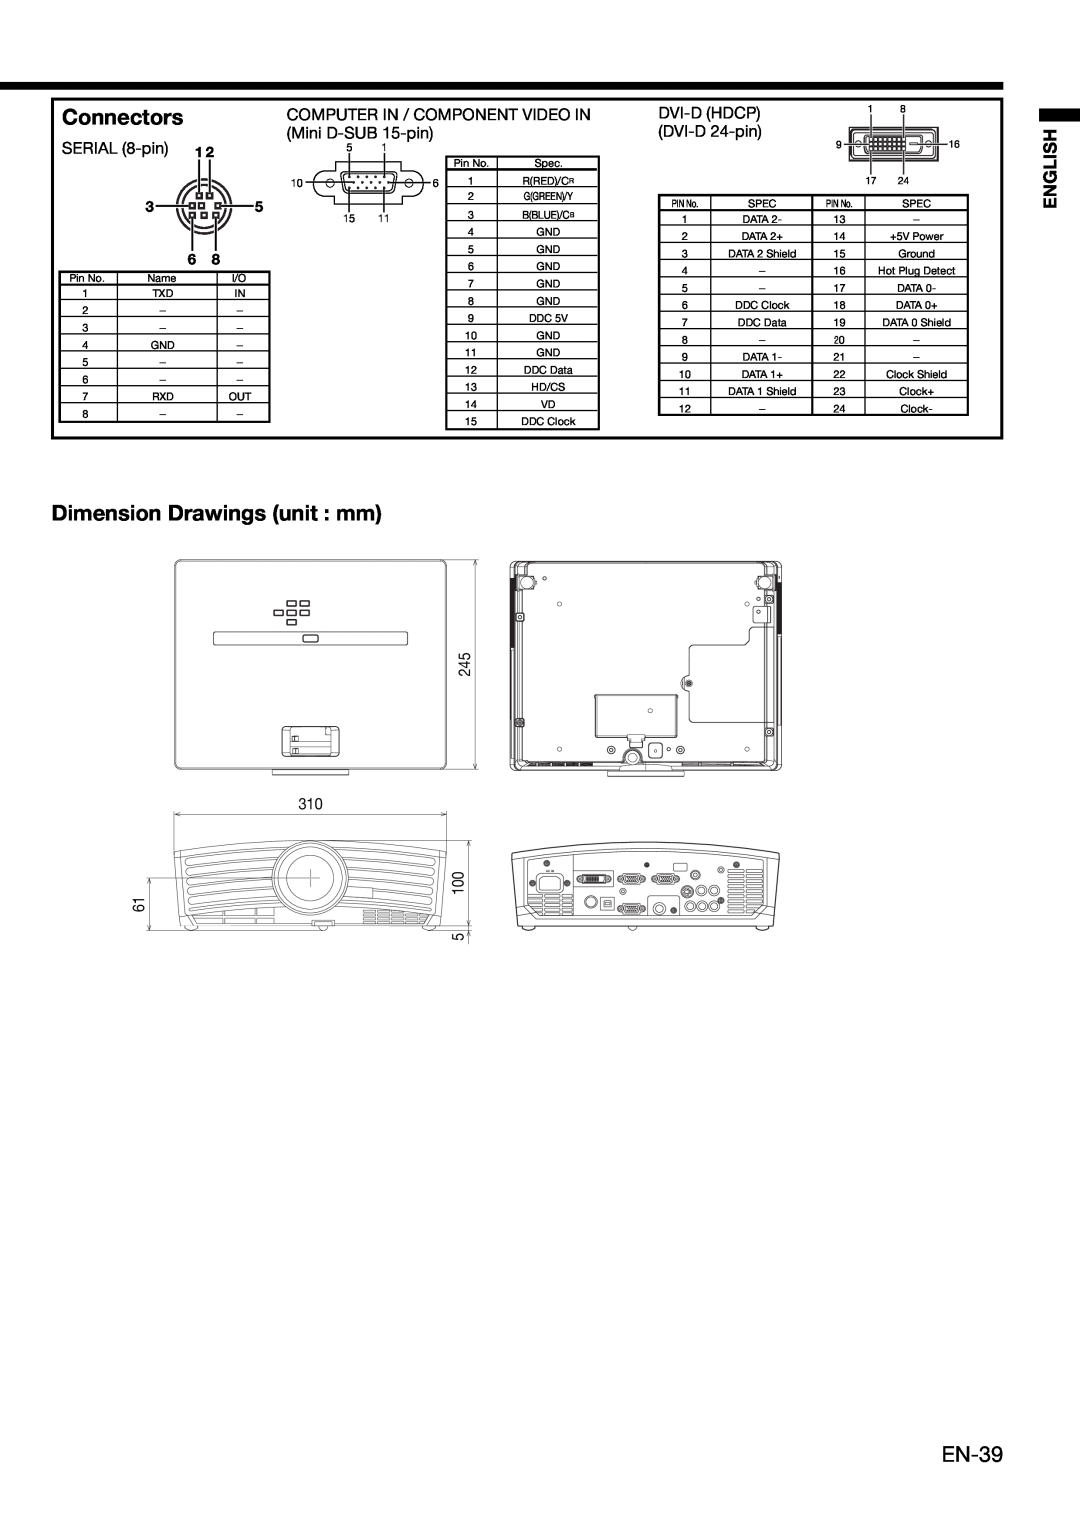 Mitsubishi Electronics XD460U user manual Connectors, Dimension Drawings unit mm, EN-39, English 